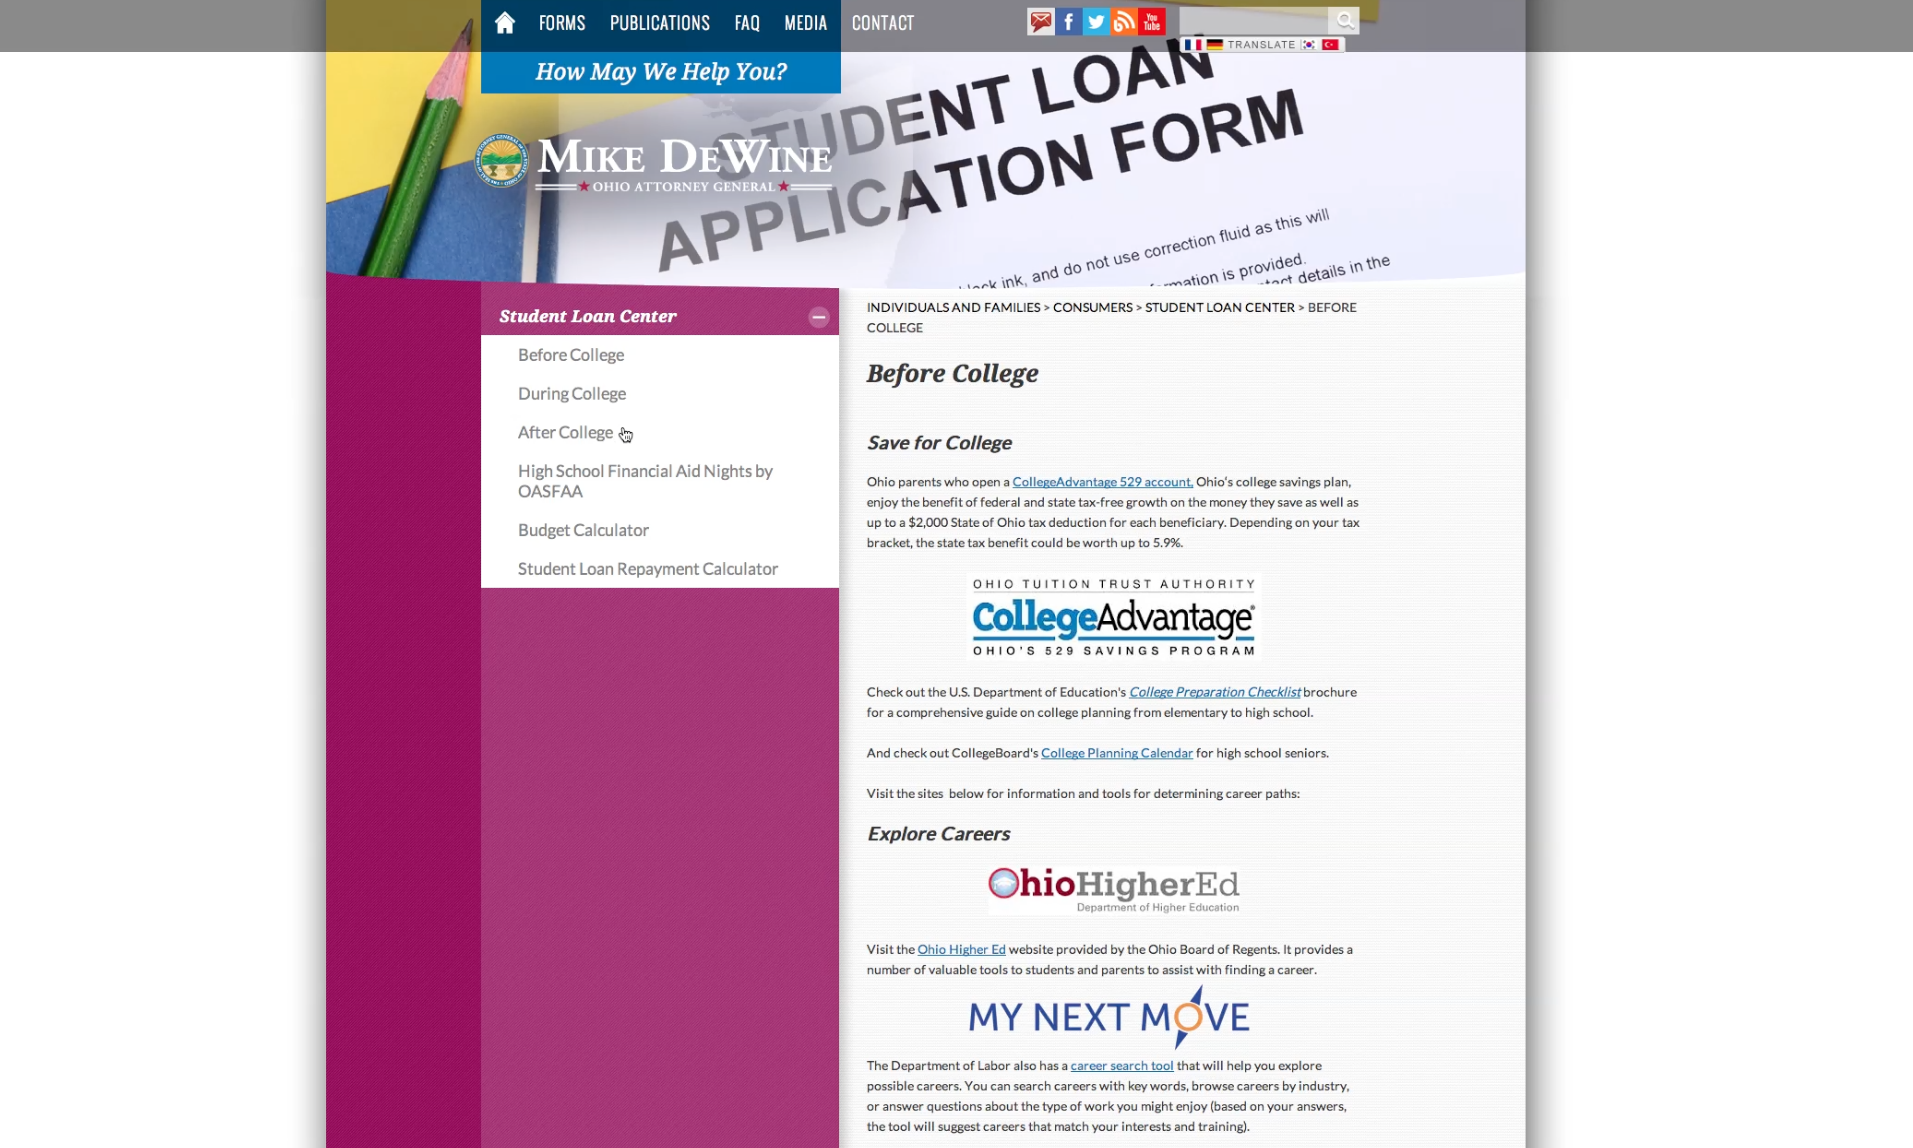 Online Student Loan Center